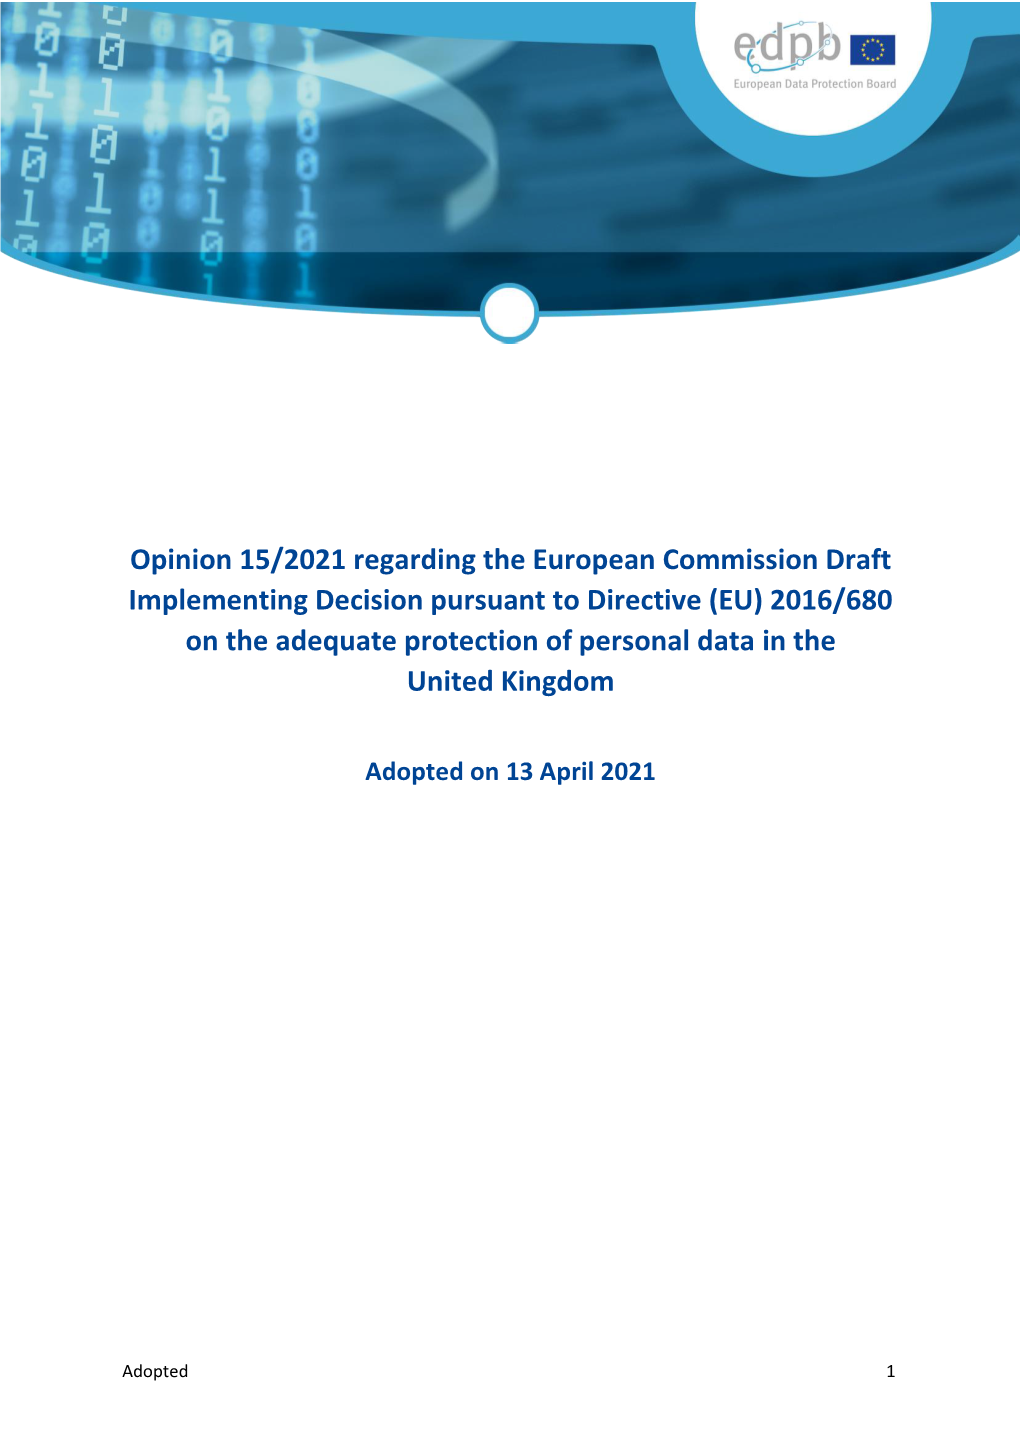 Opinion 15/2021 Regarding the European Commission Draft